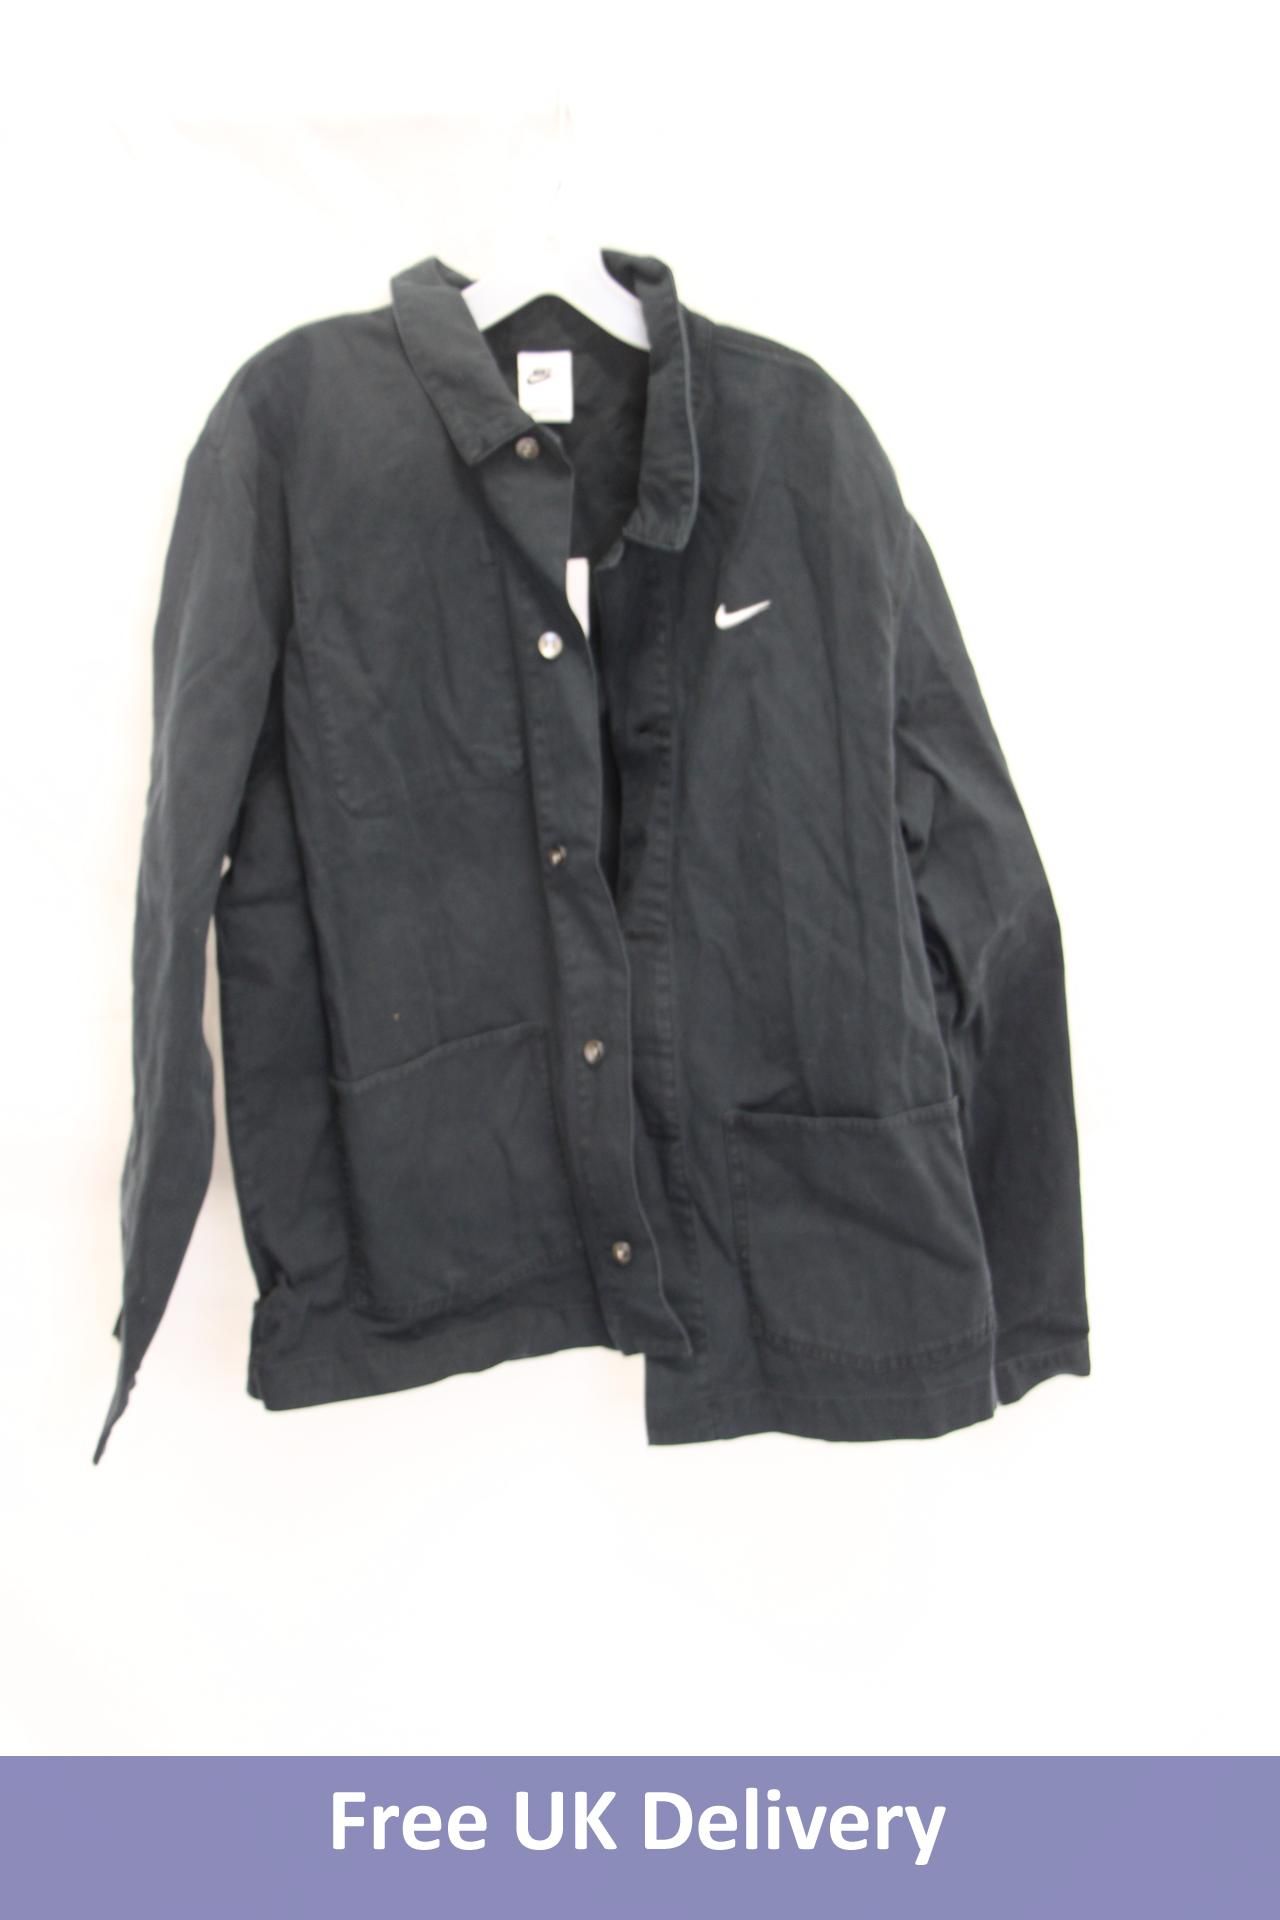 Nike Chore Jacket, Black, Size L